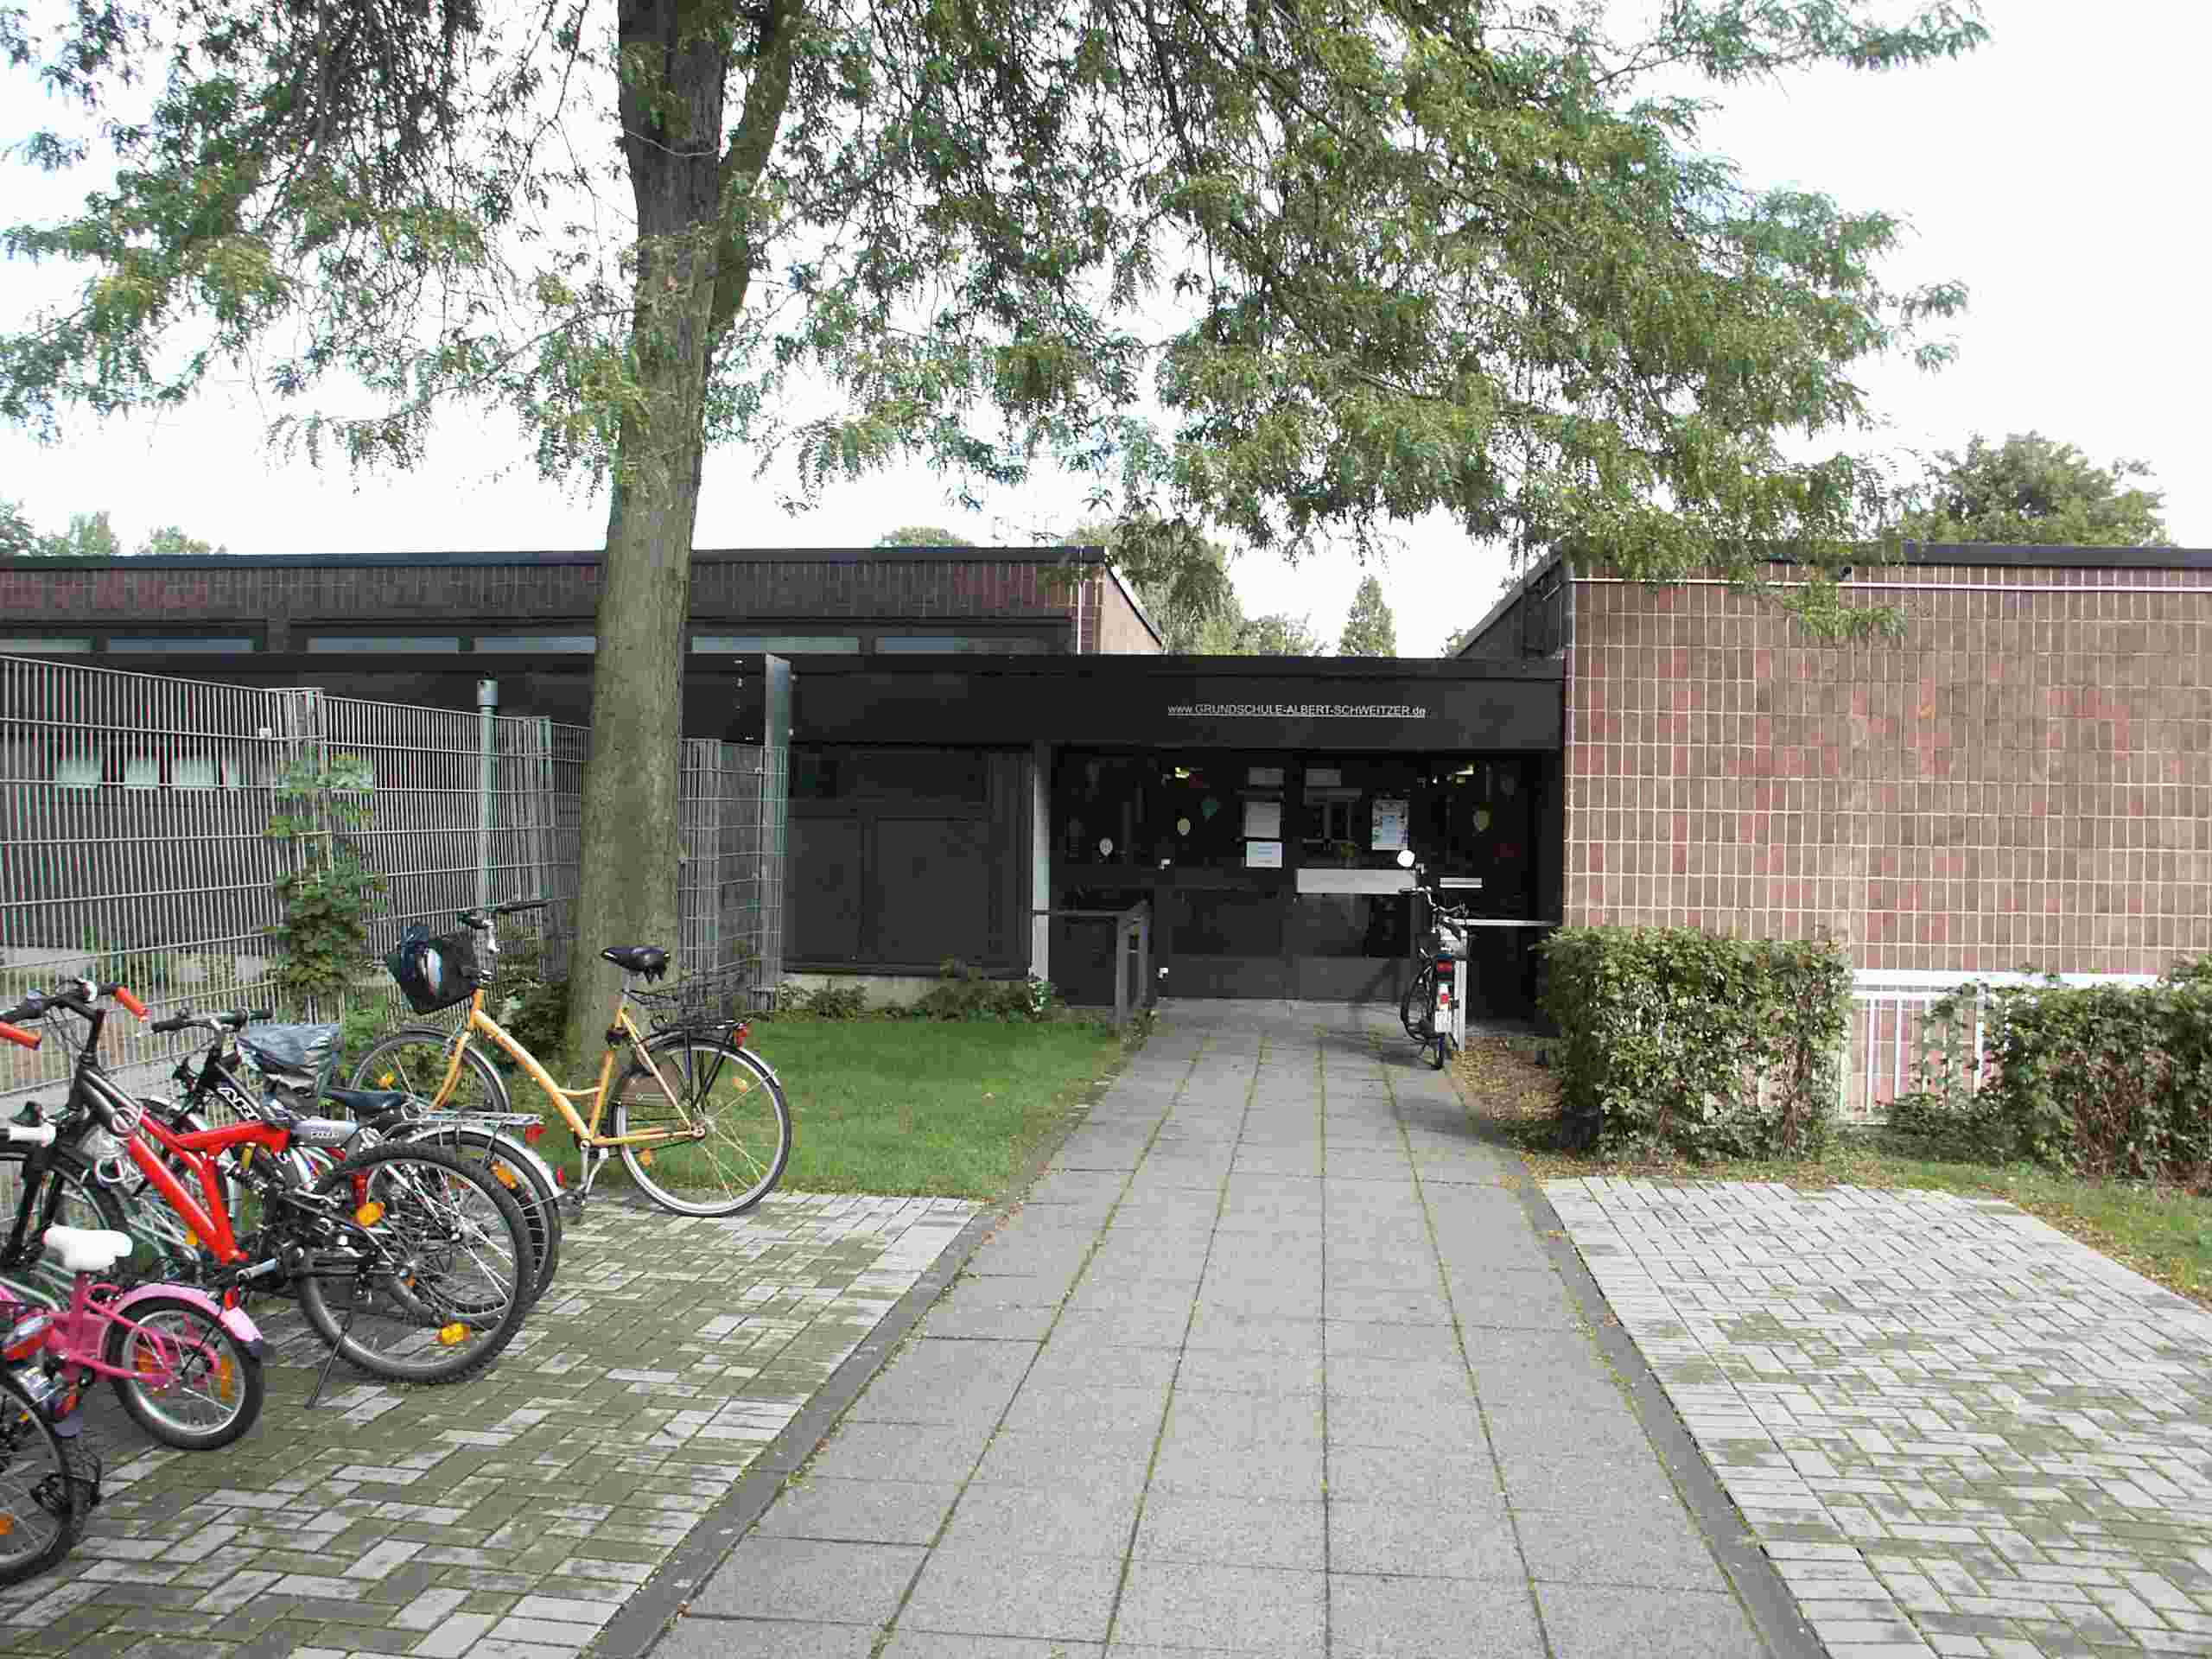 Schule Albert-Schweitzer-Straße